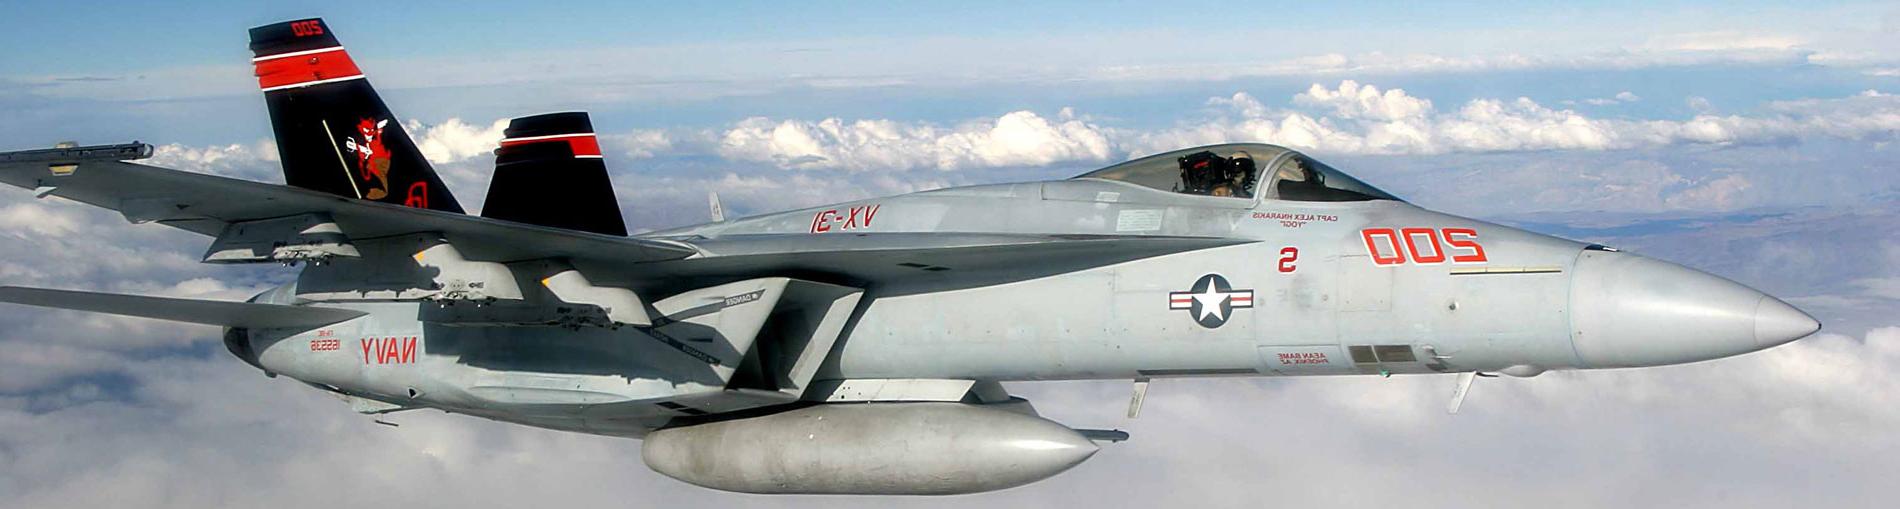 F18 VX-31 - 图片由贸易委员会提供